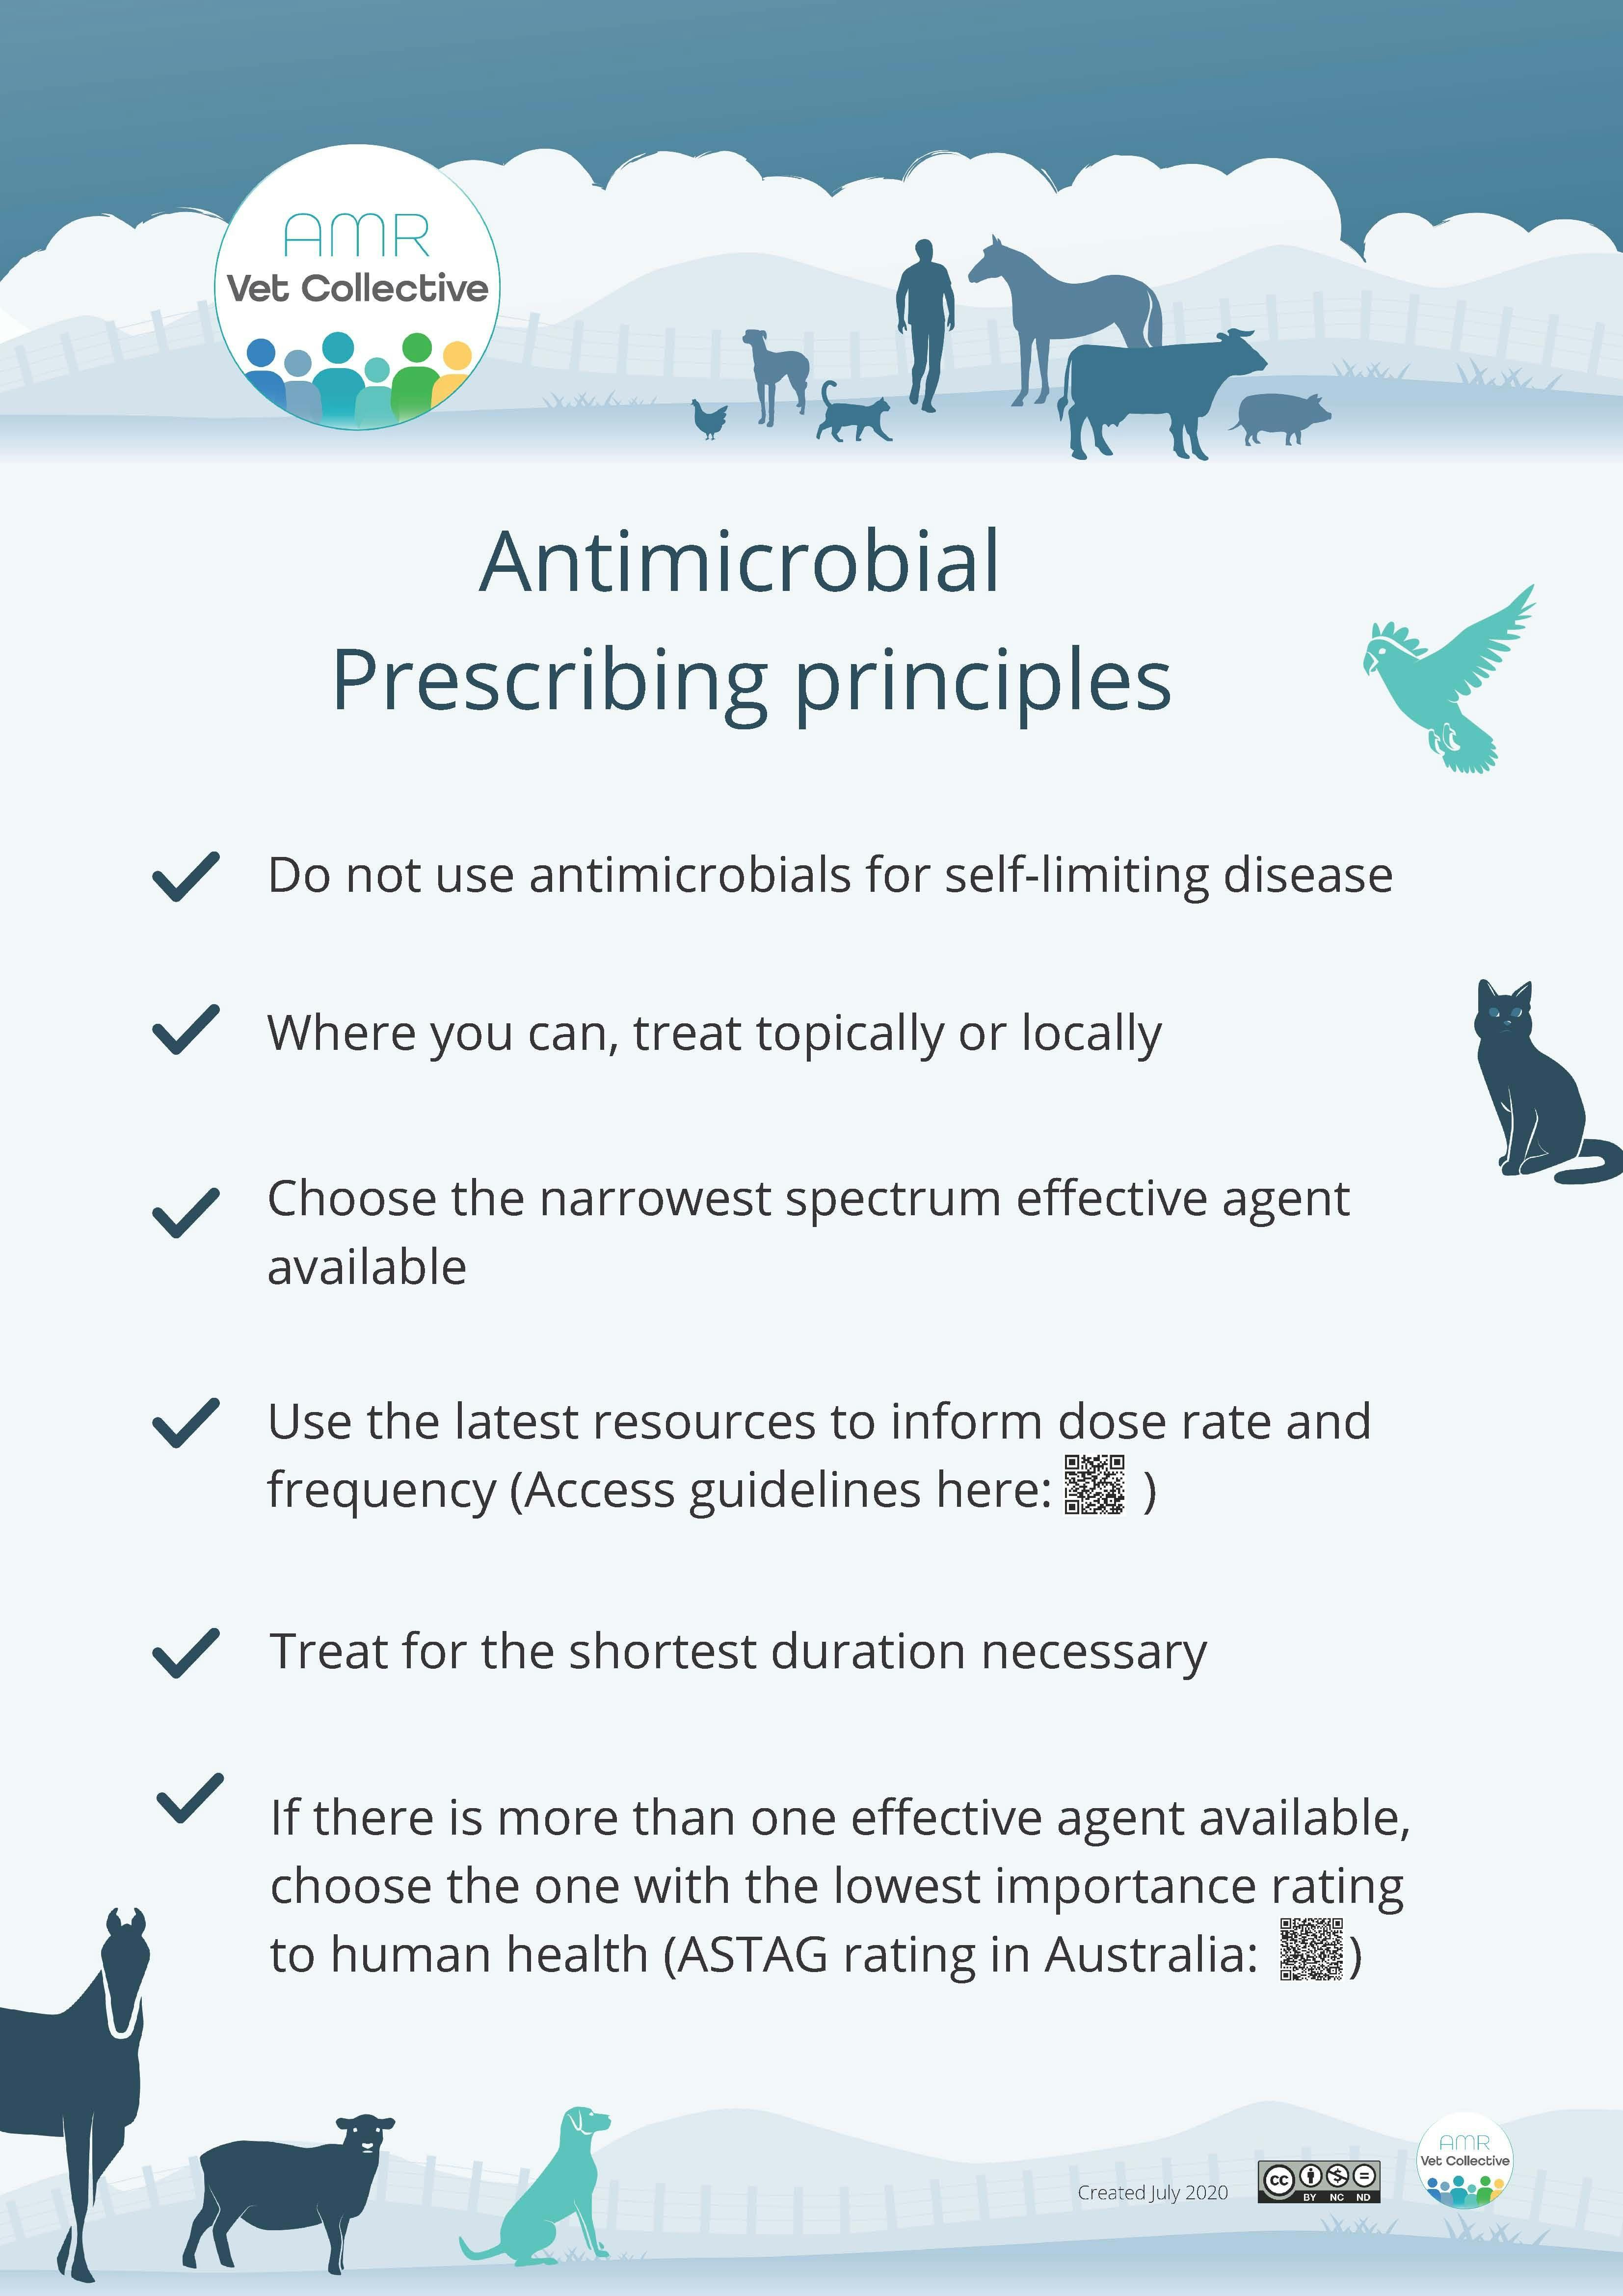 AMR Vet Collective Prescribing Principles (Photo courtesy of AMVR Vet Collective). 